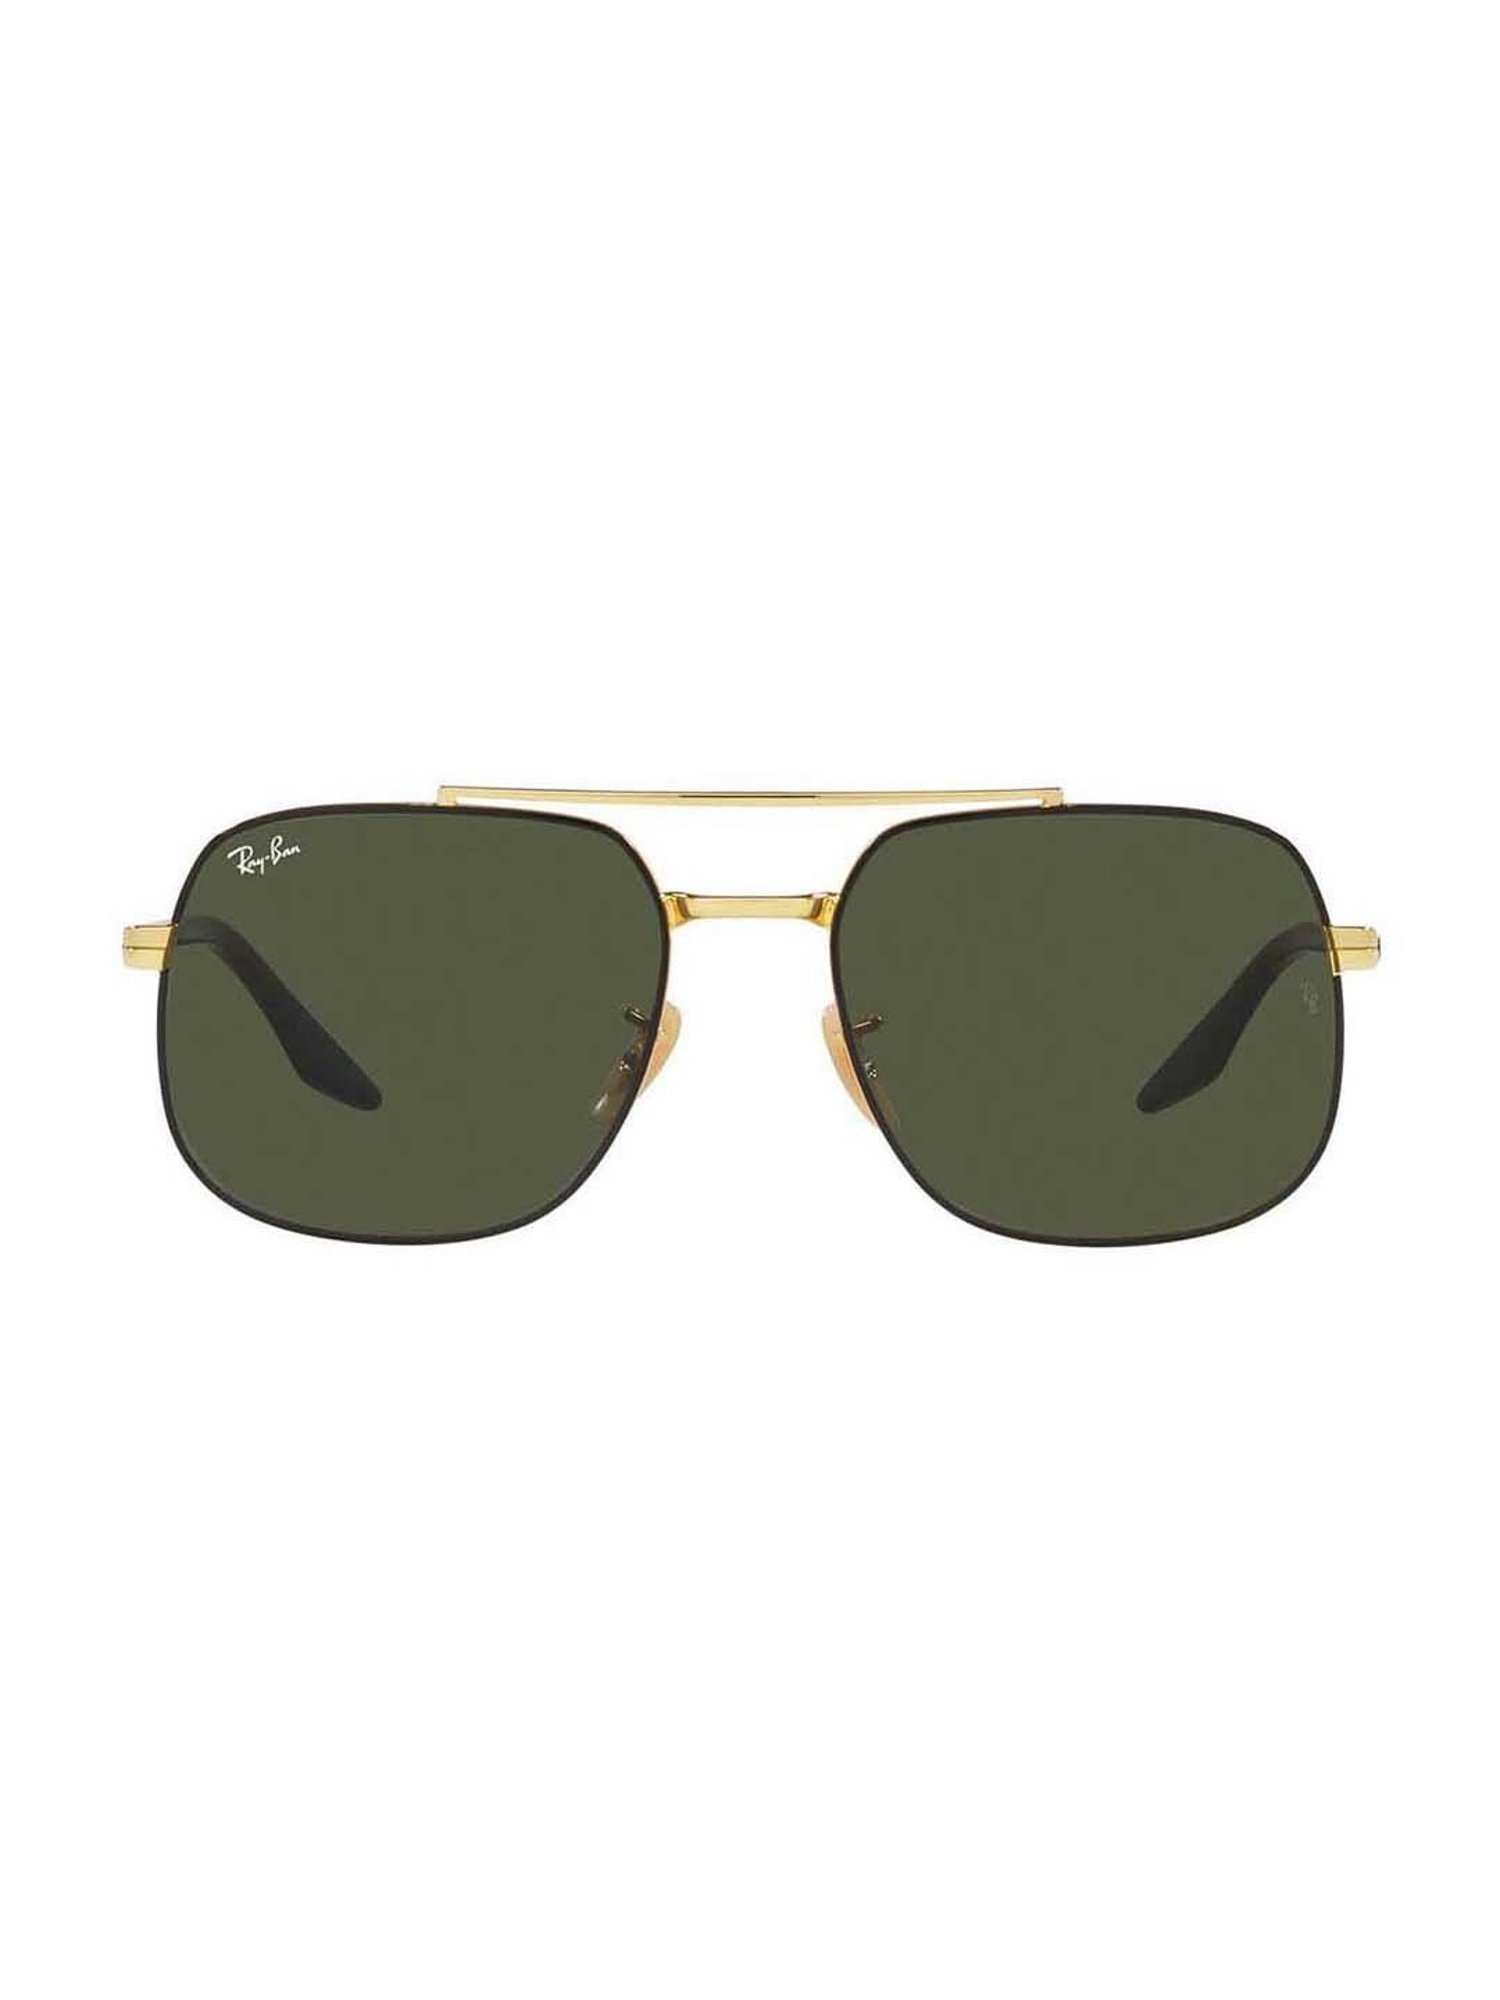 Ray Ban Green Tinted Square Sunglasses S35C5495 @ ₹6898